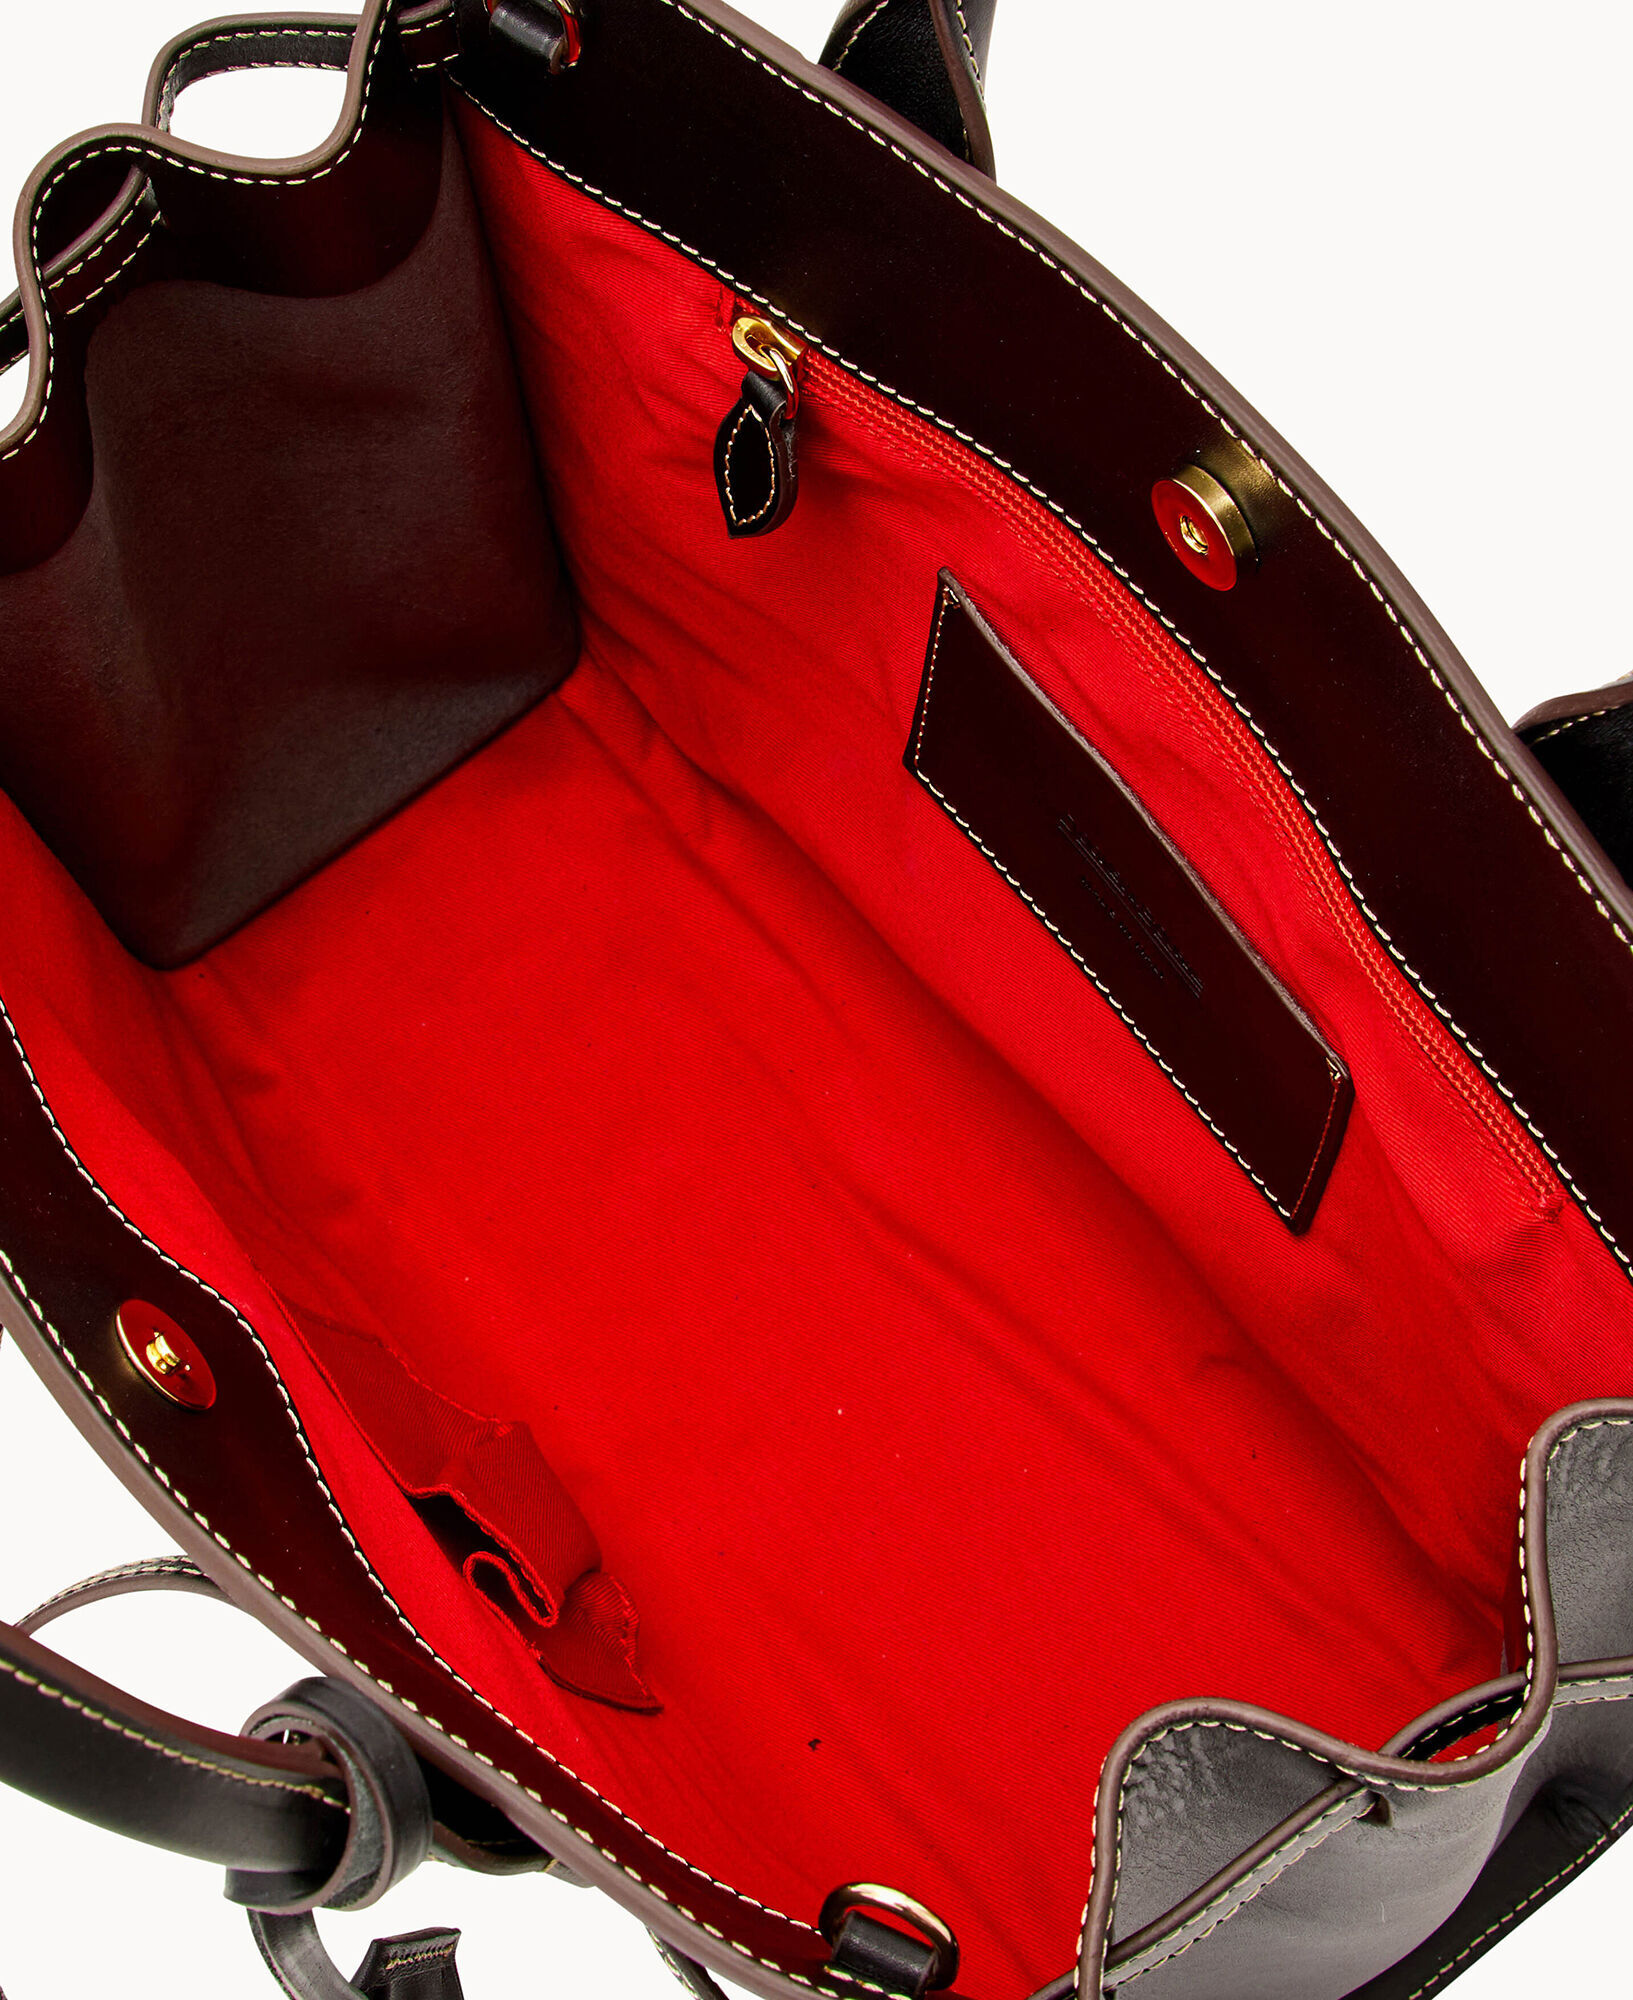 Burberry Handbags, Purses & Wallets outlet - Men - 1800 products